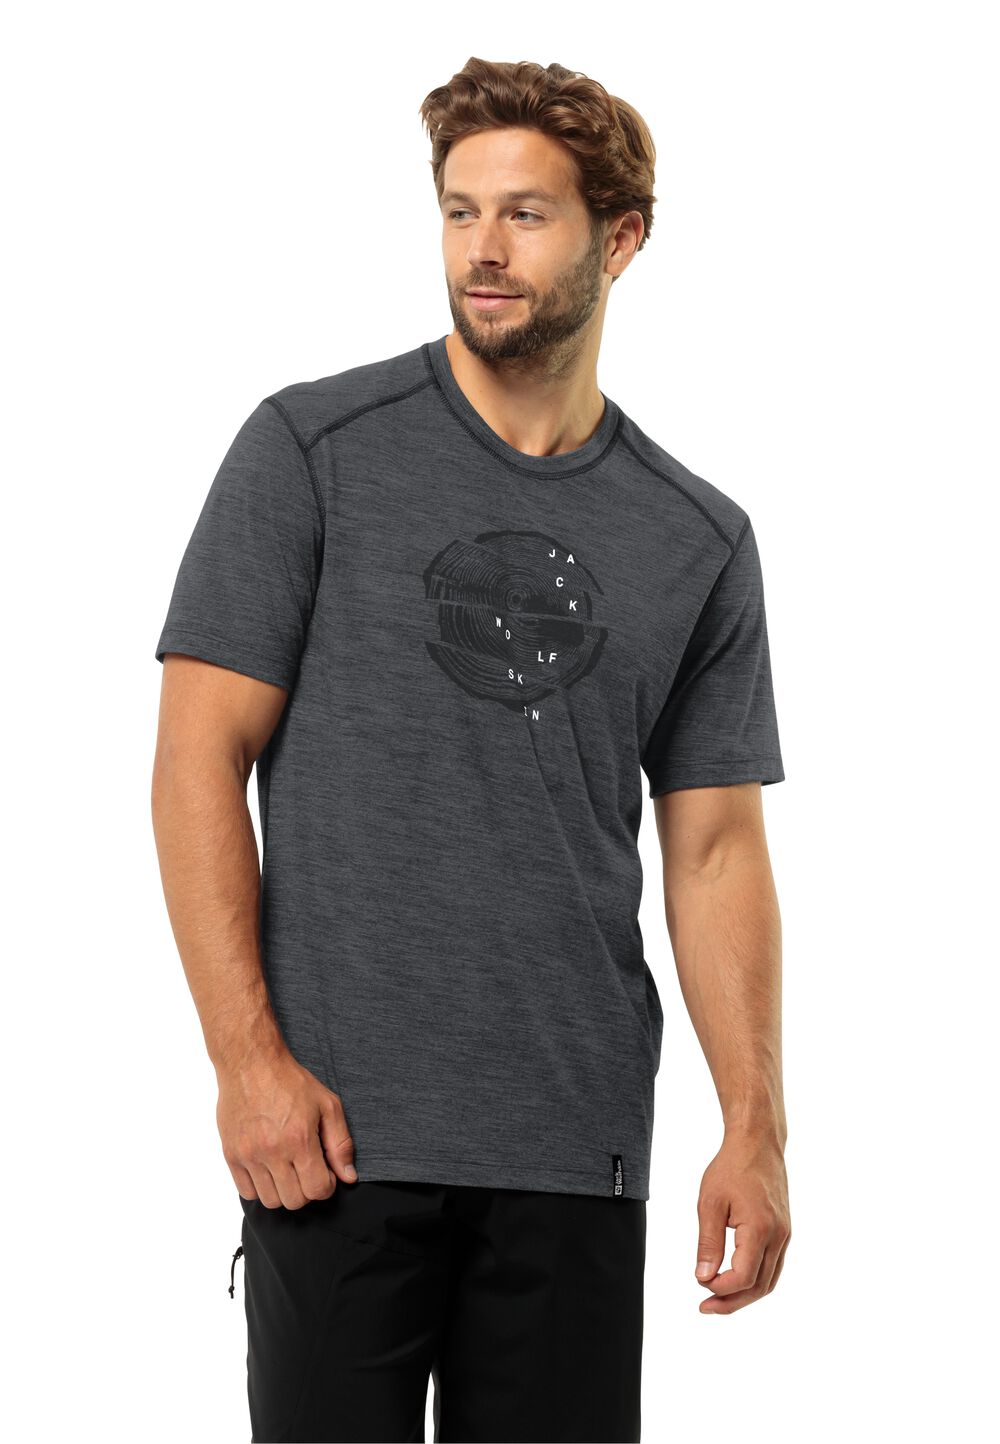 Jack Wolfskin Kammweg Graphic S S Men Heren T-shirt van merinoswol XL phantom